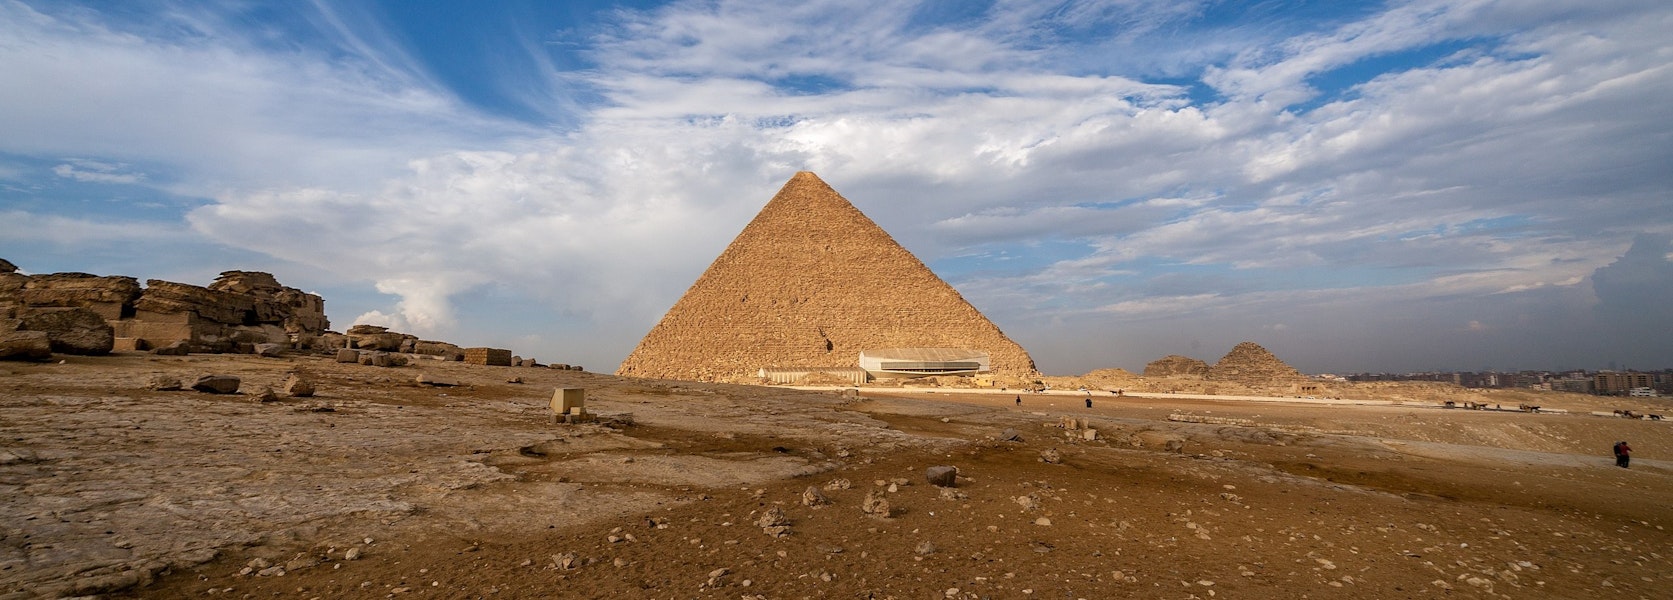 grande pyramide de gizeh